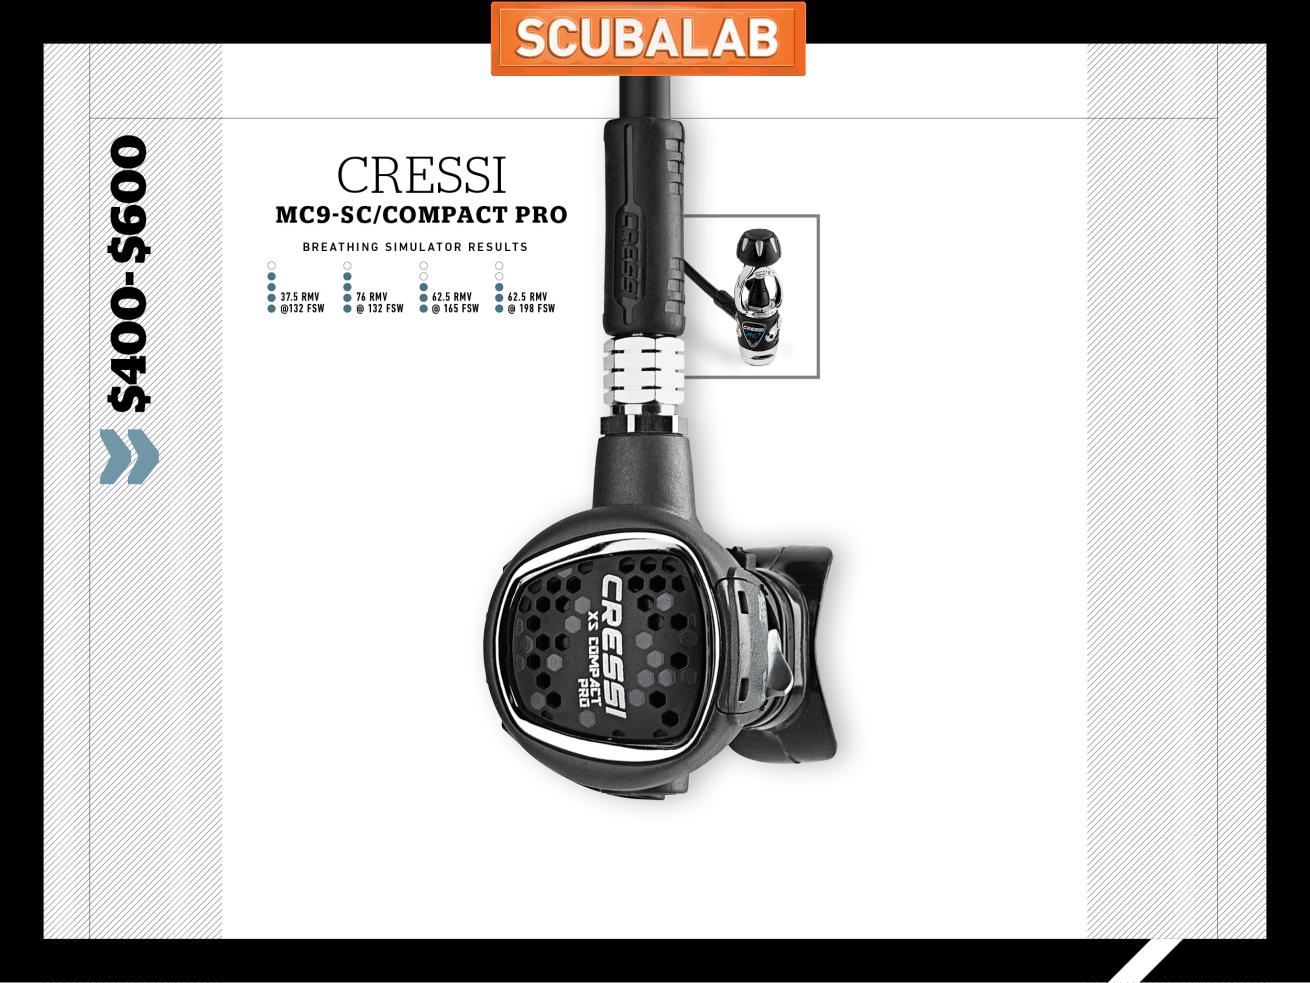 Cressi Compact Pro scuba diving regulator ScubaLab gear review